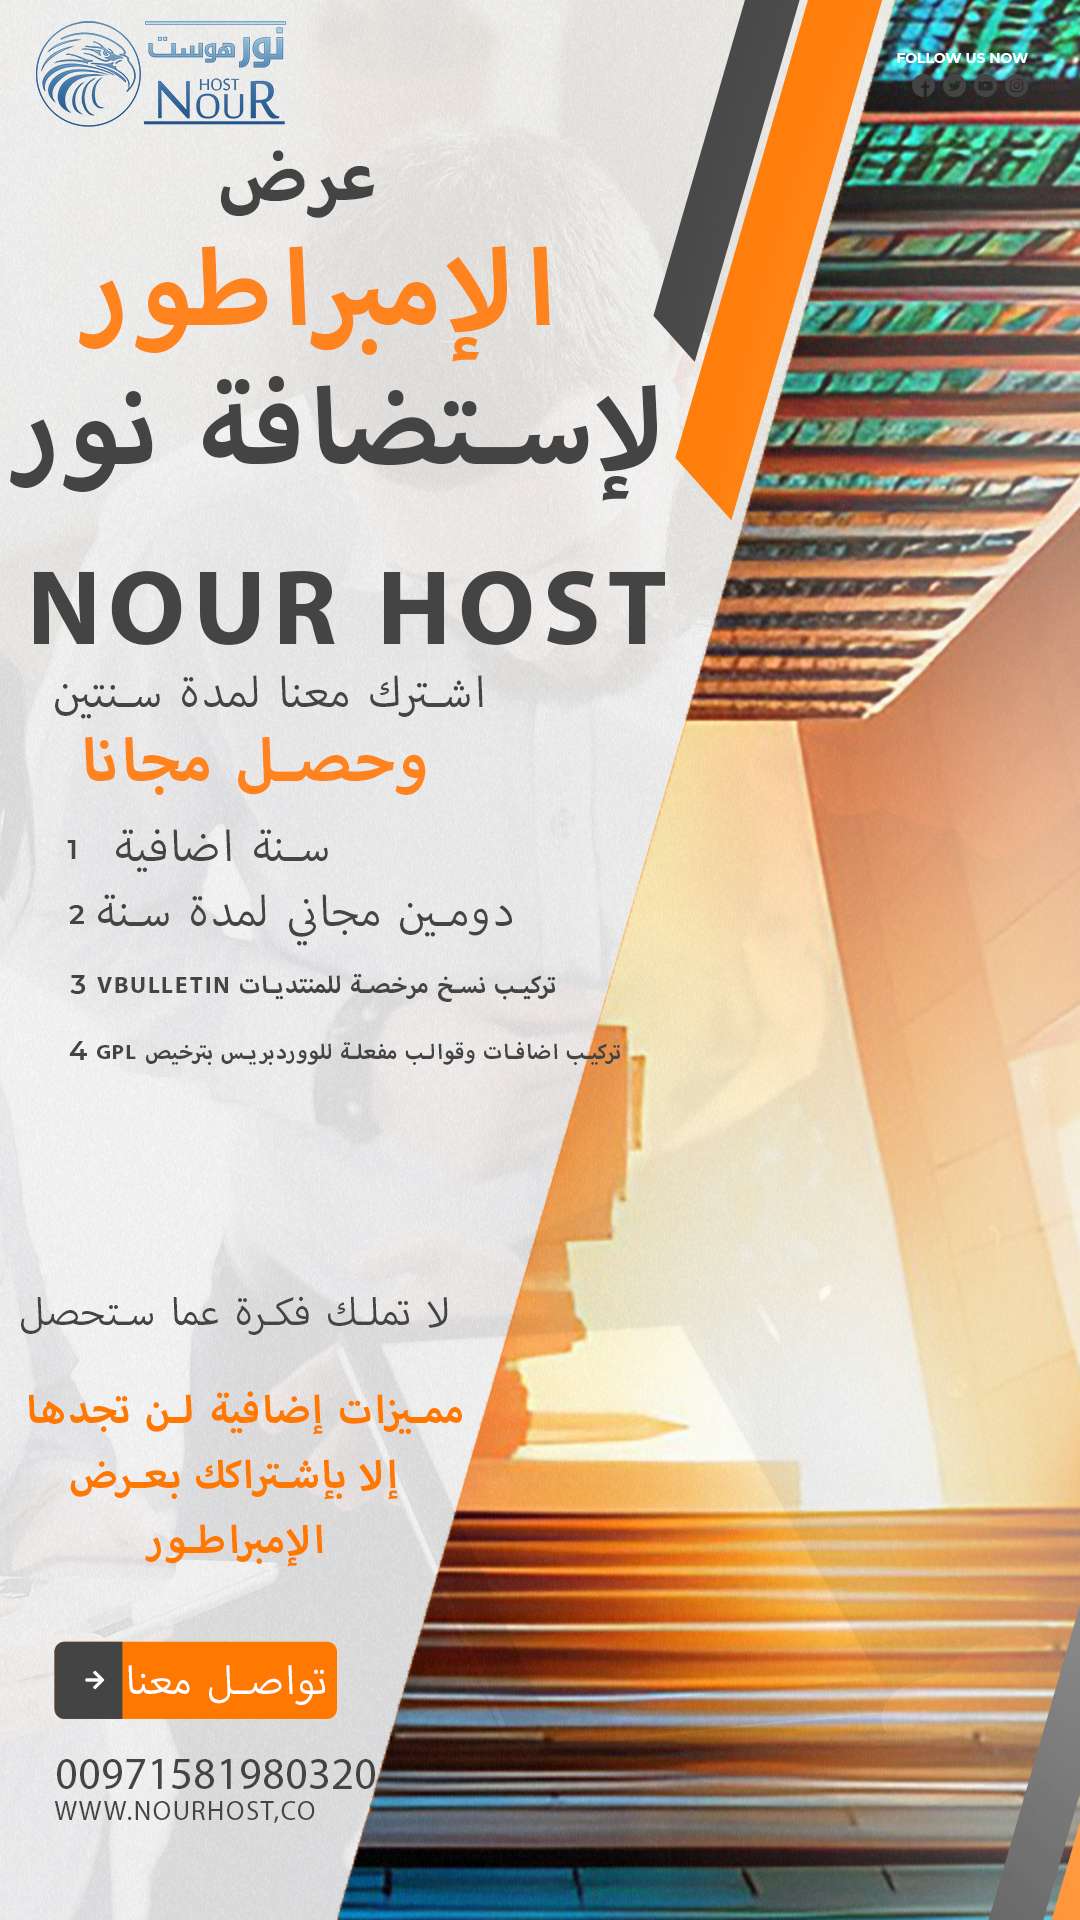 عرض الإمبراطور لإستضافة نور Nour Host